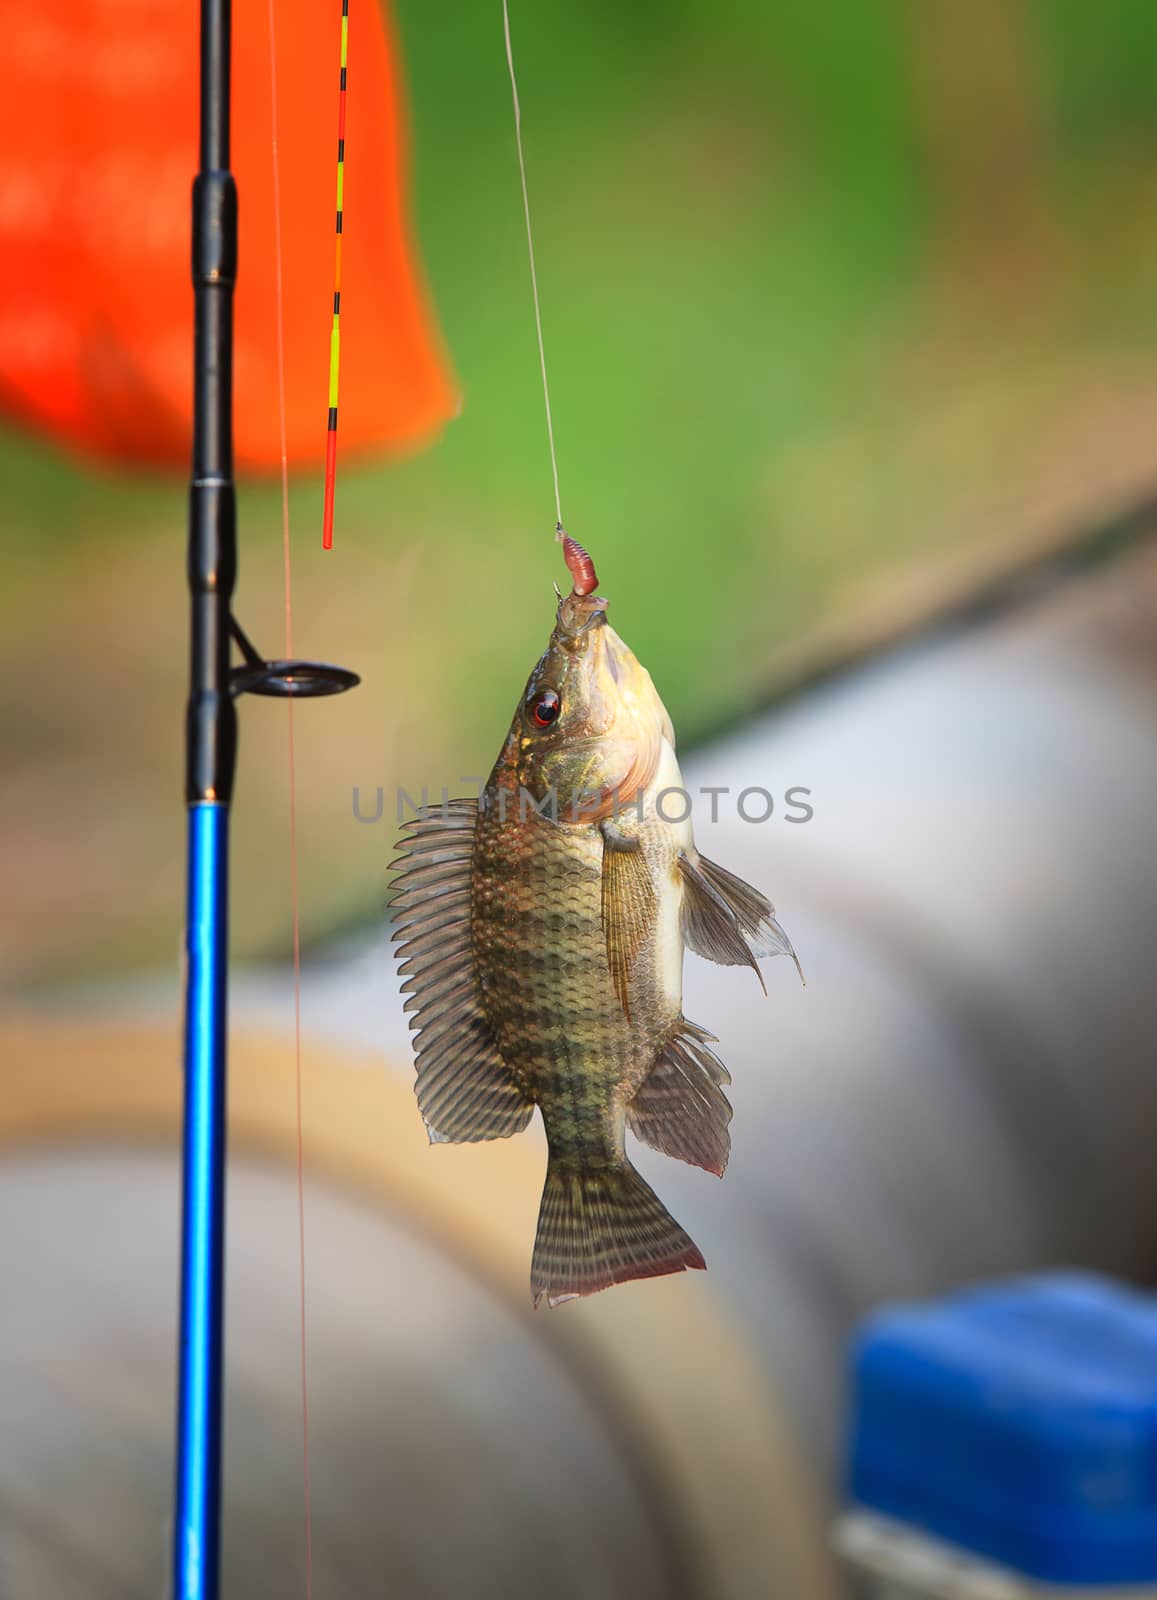 nile fish hanging on hook